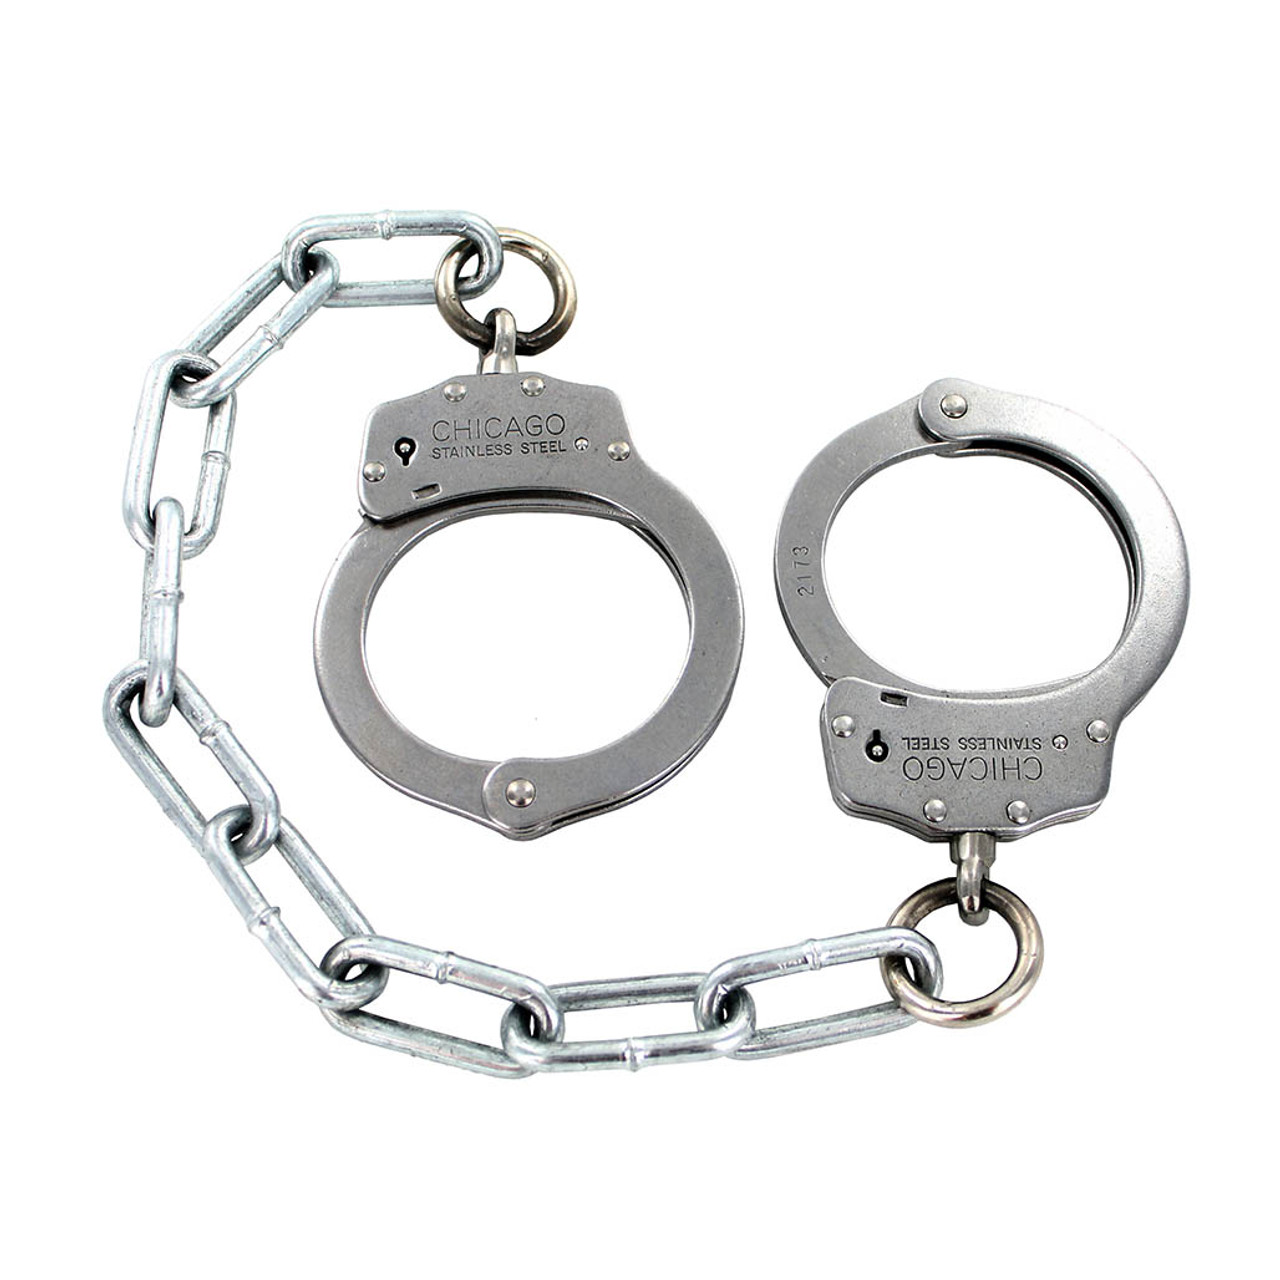 Chicago Model X55 Long Chain Handcuffs